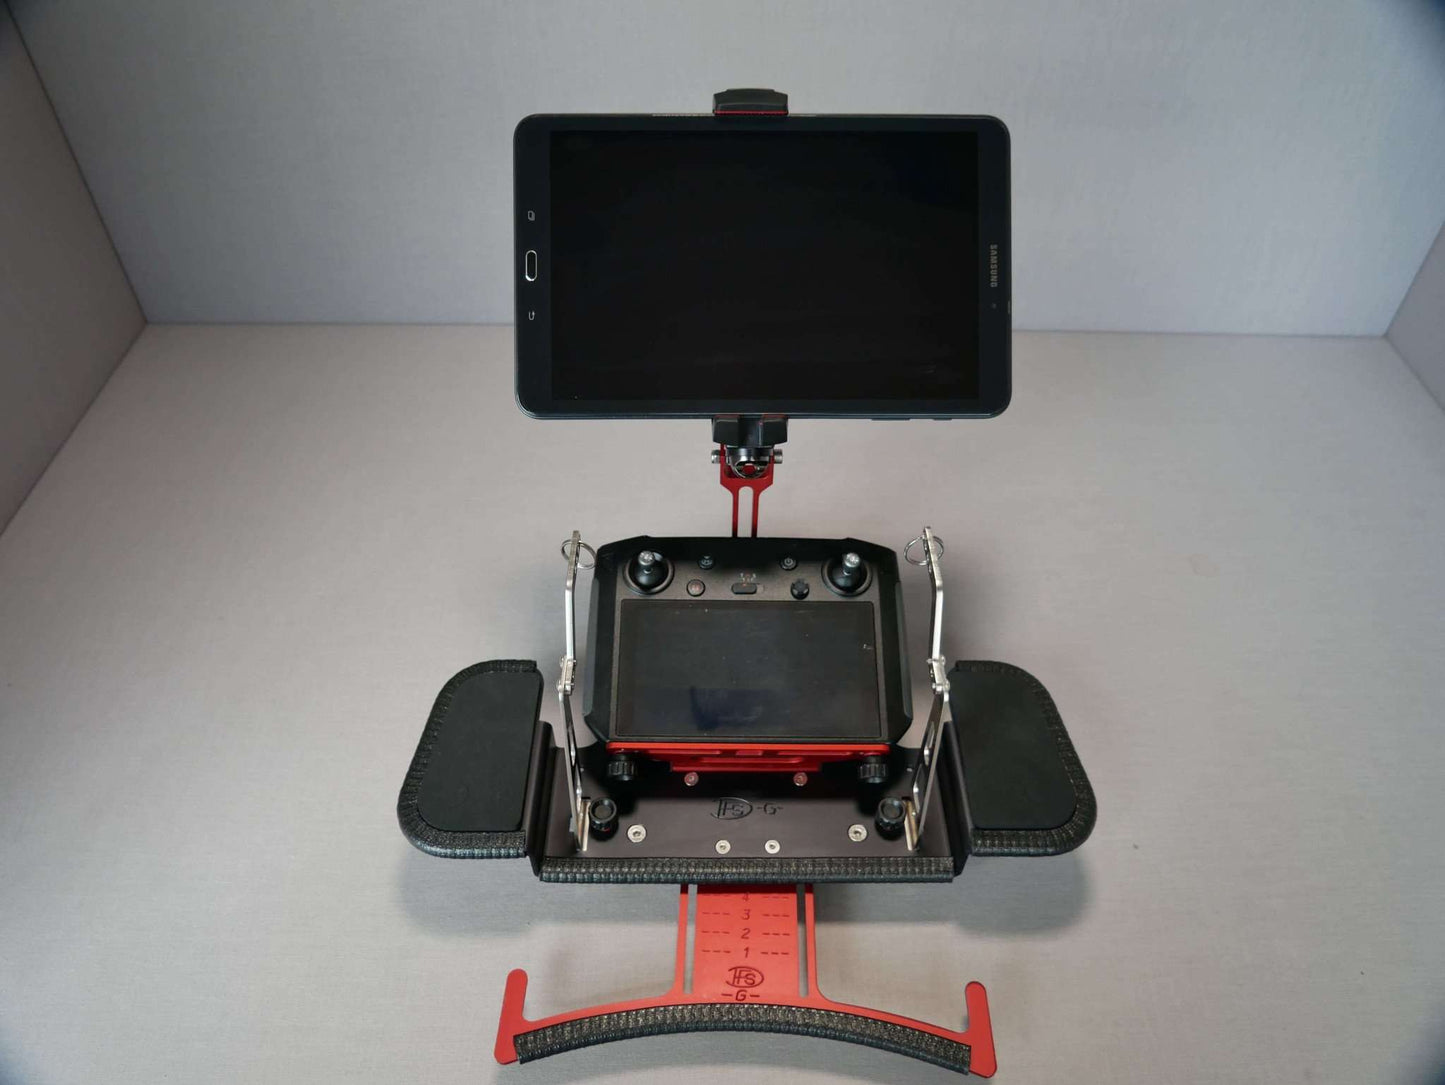 Senderpult mit DJI Smart Controller und Tablet-/Handyhalter an 10 Zoll Tablet befestigt